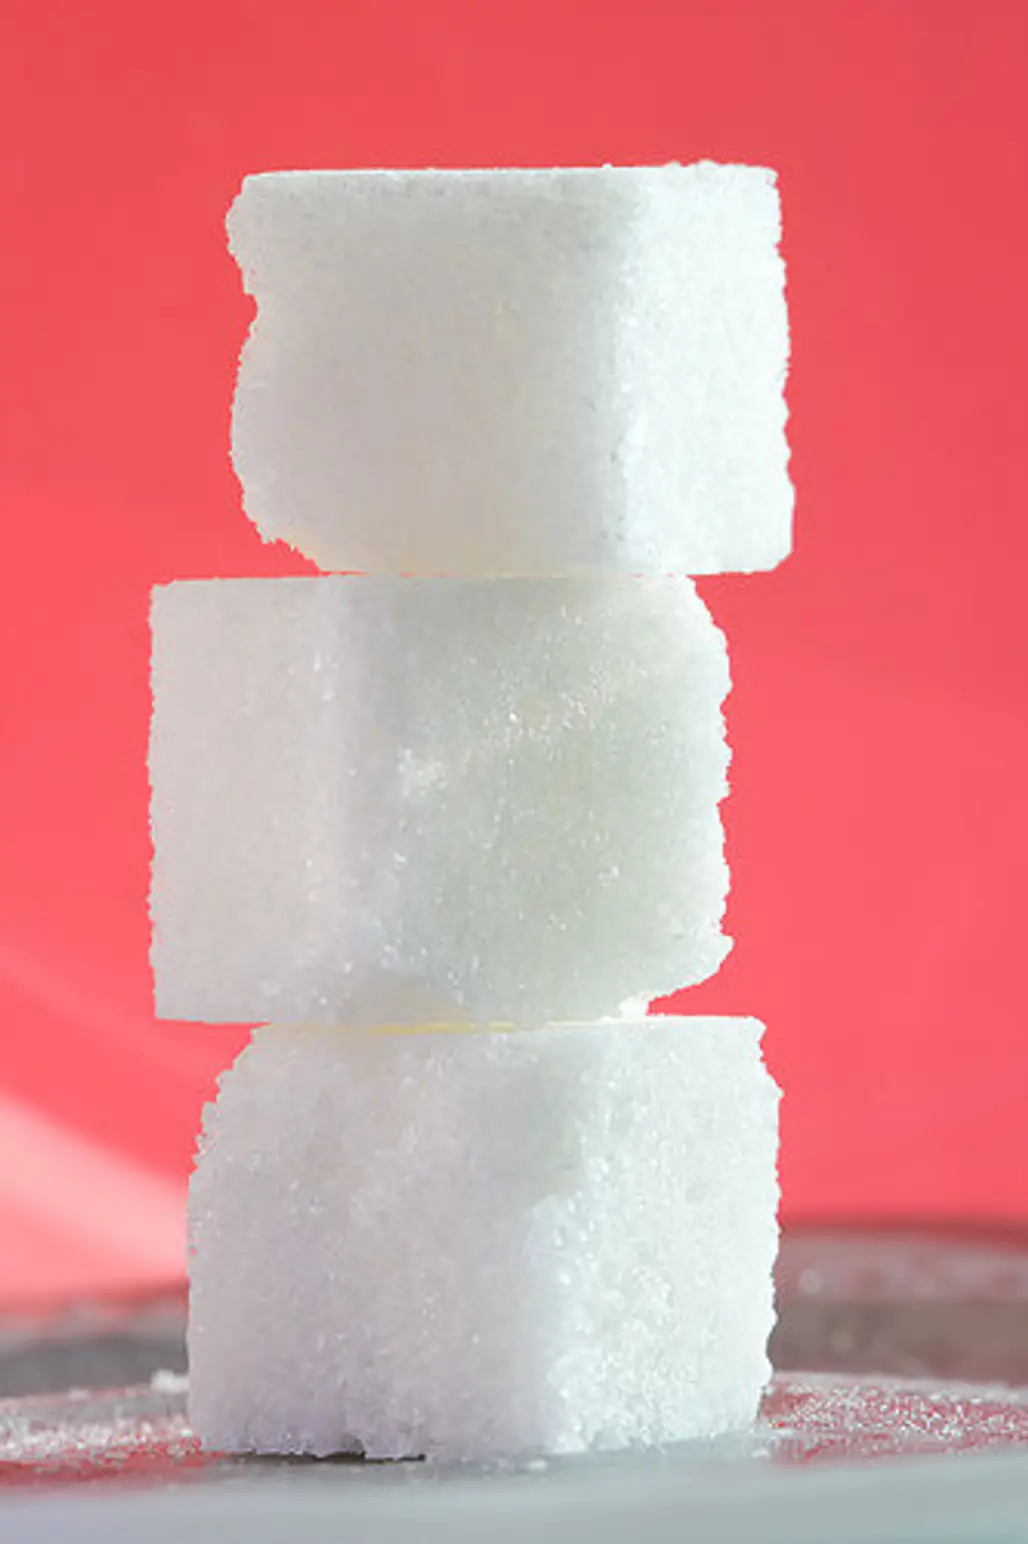 Sugar Causes Diabetes